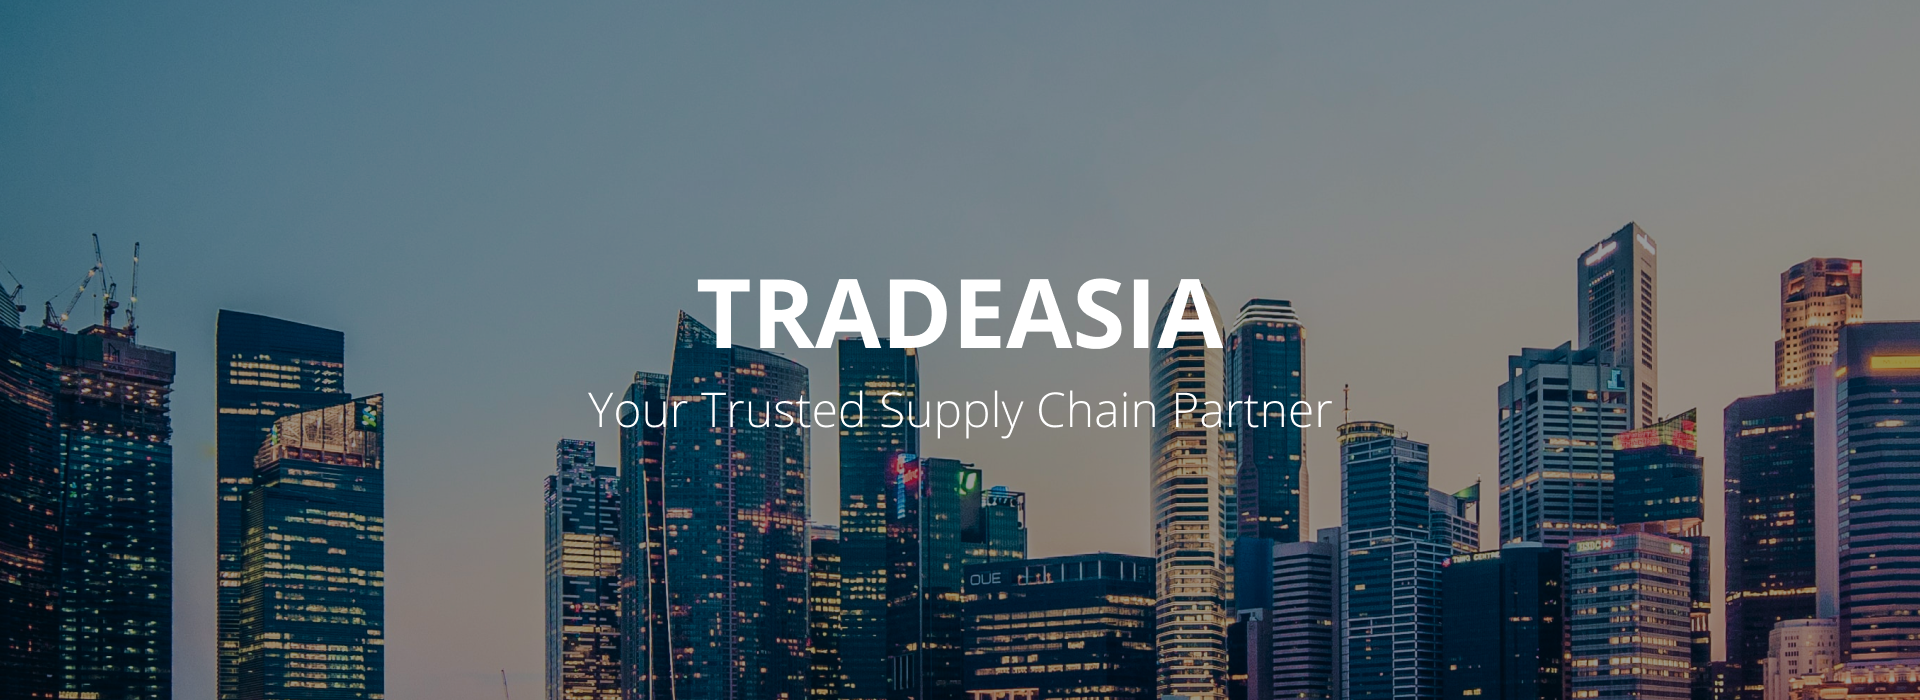 Tradeasia Company Image Website